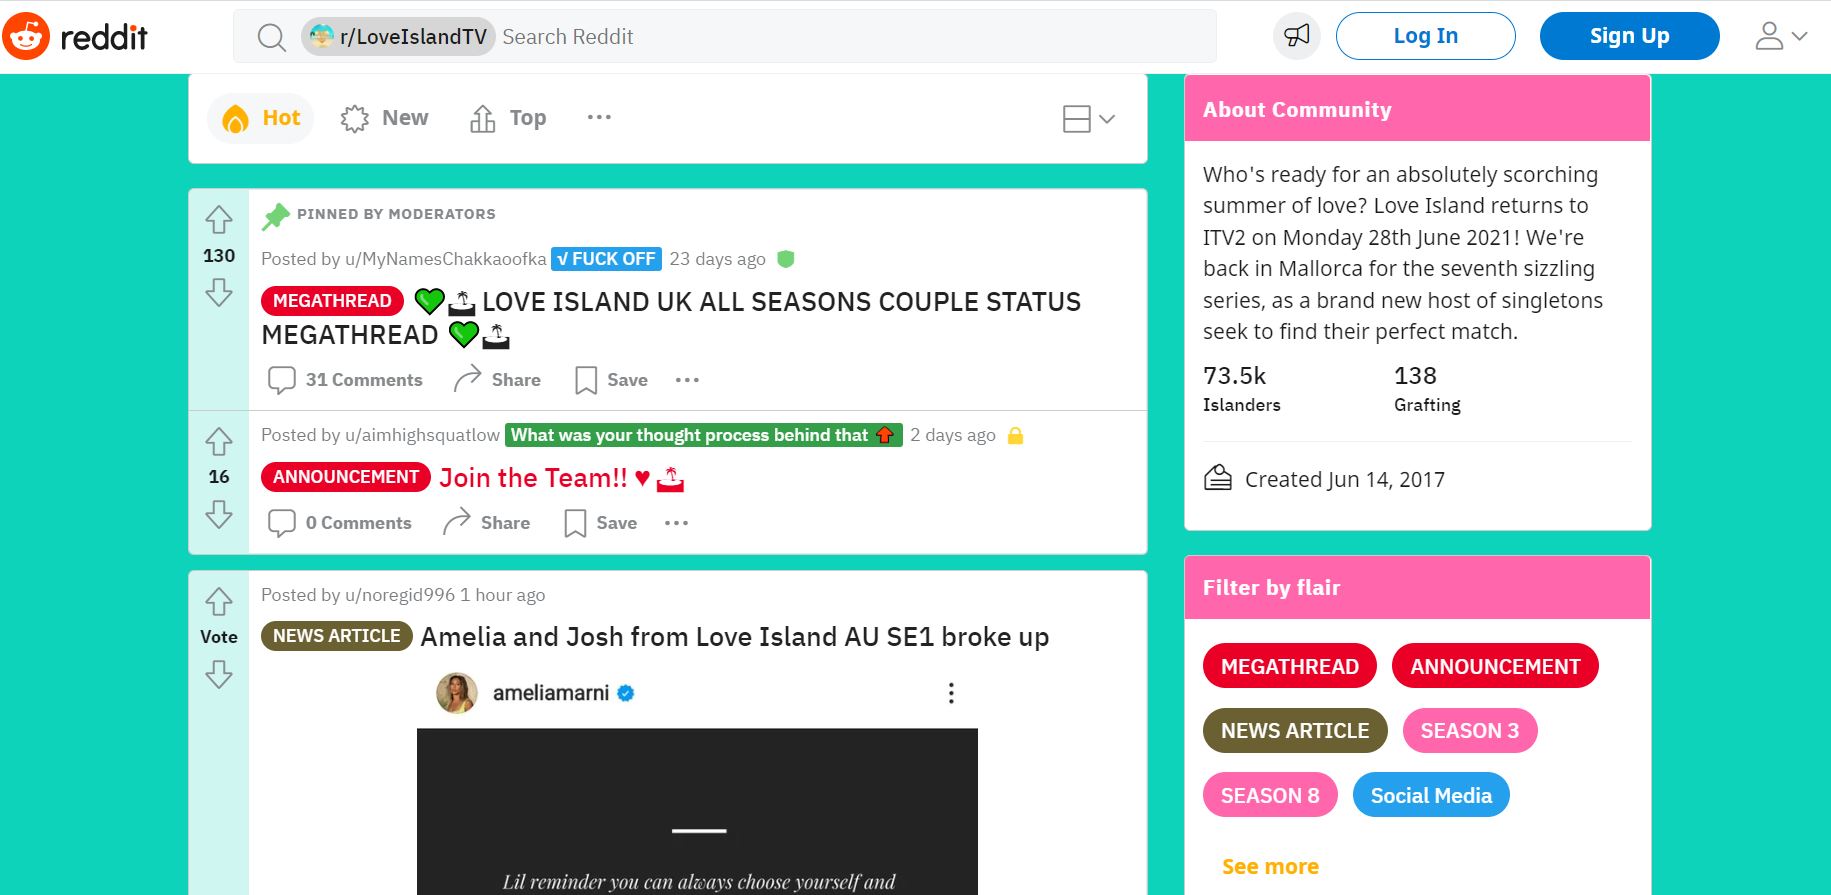 Reddit becomes Love Island's official fan partner | Mobile Marketing ...